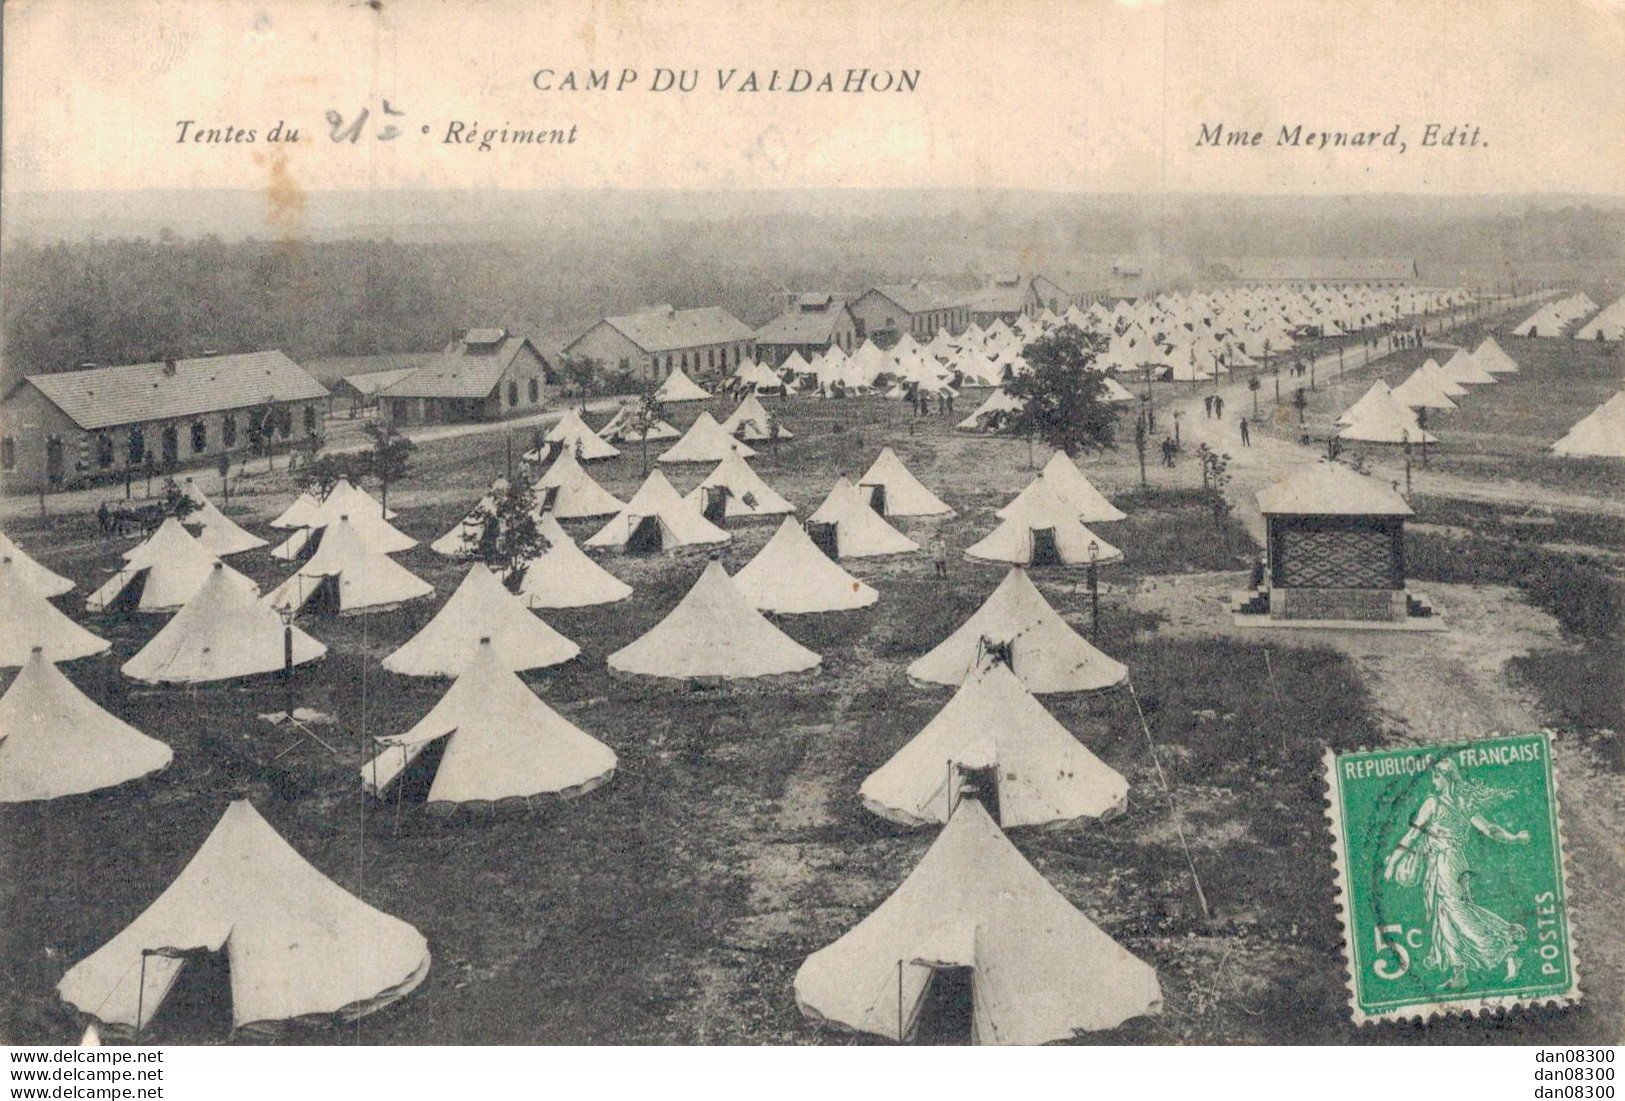 25 CAMP DU VALDAHON TENTES DU 21eme REGIMENT - Manoeuvres